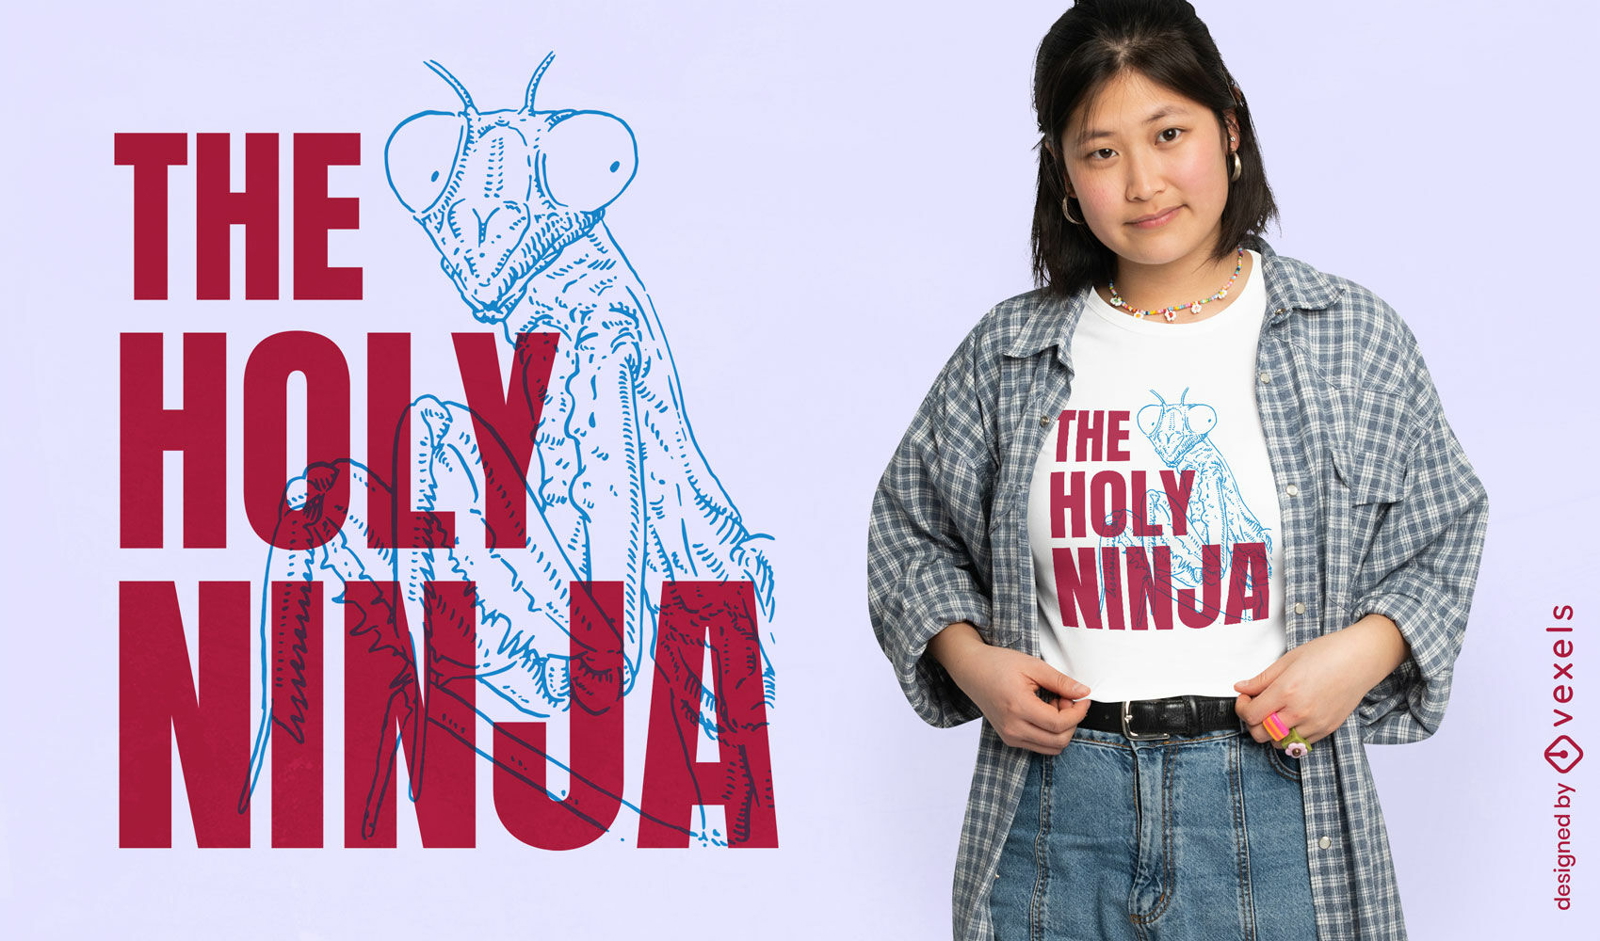 Holy ninja mantis t-shirt design